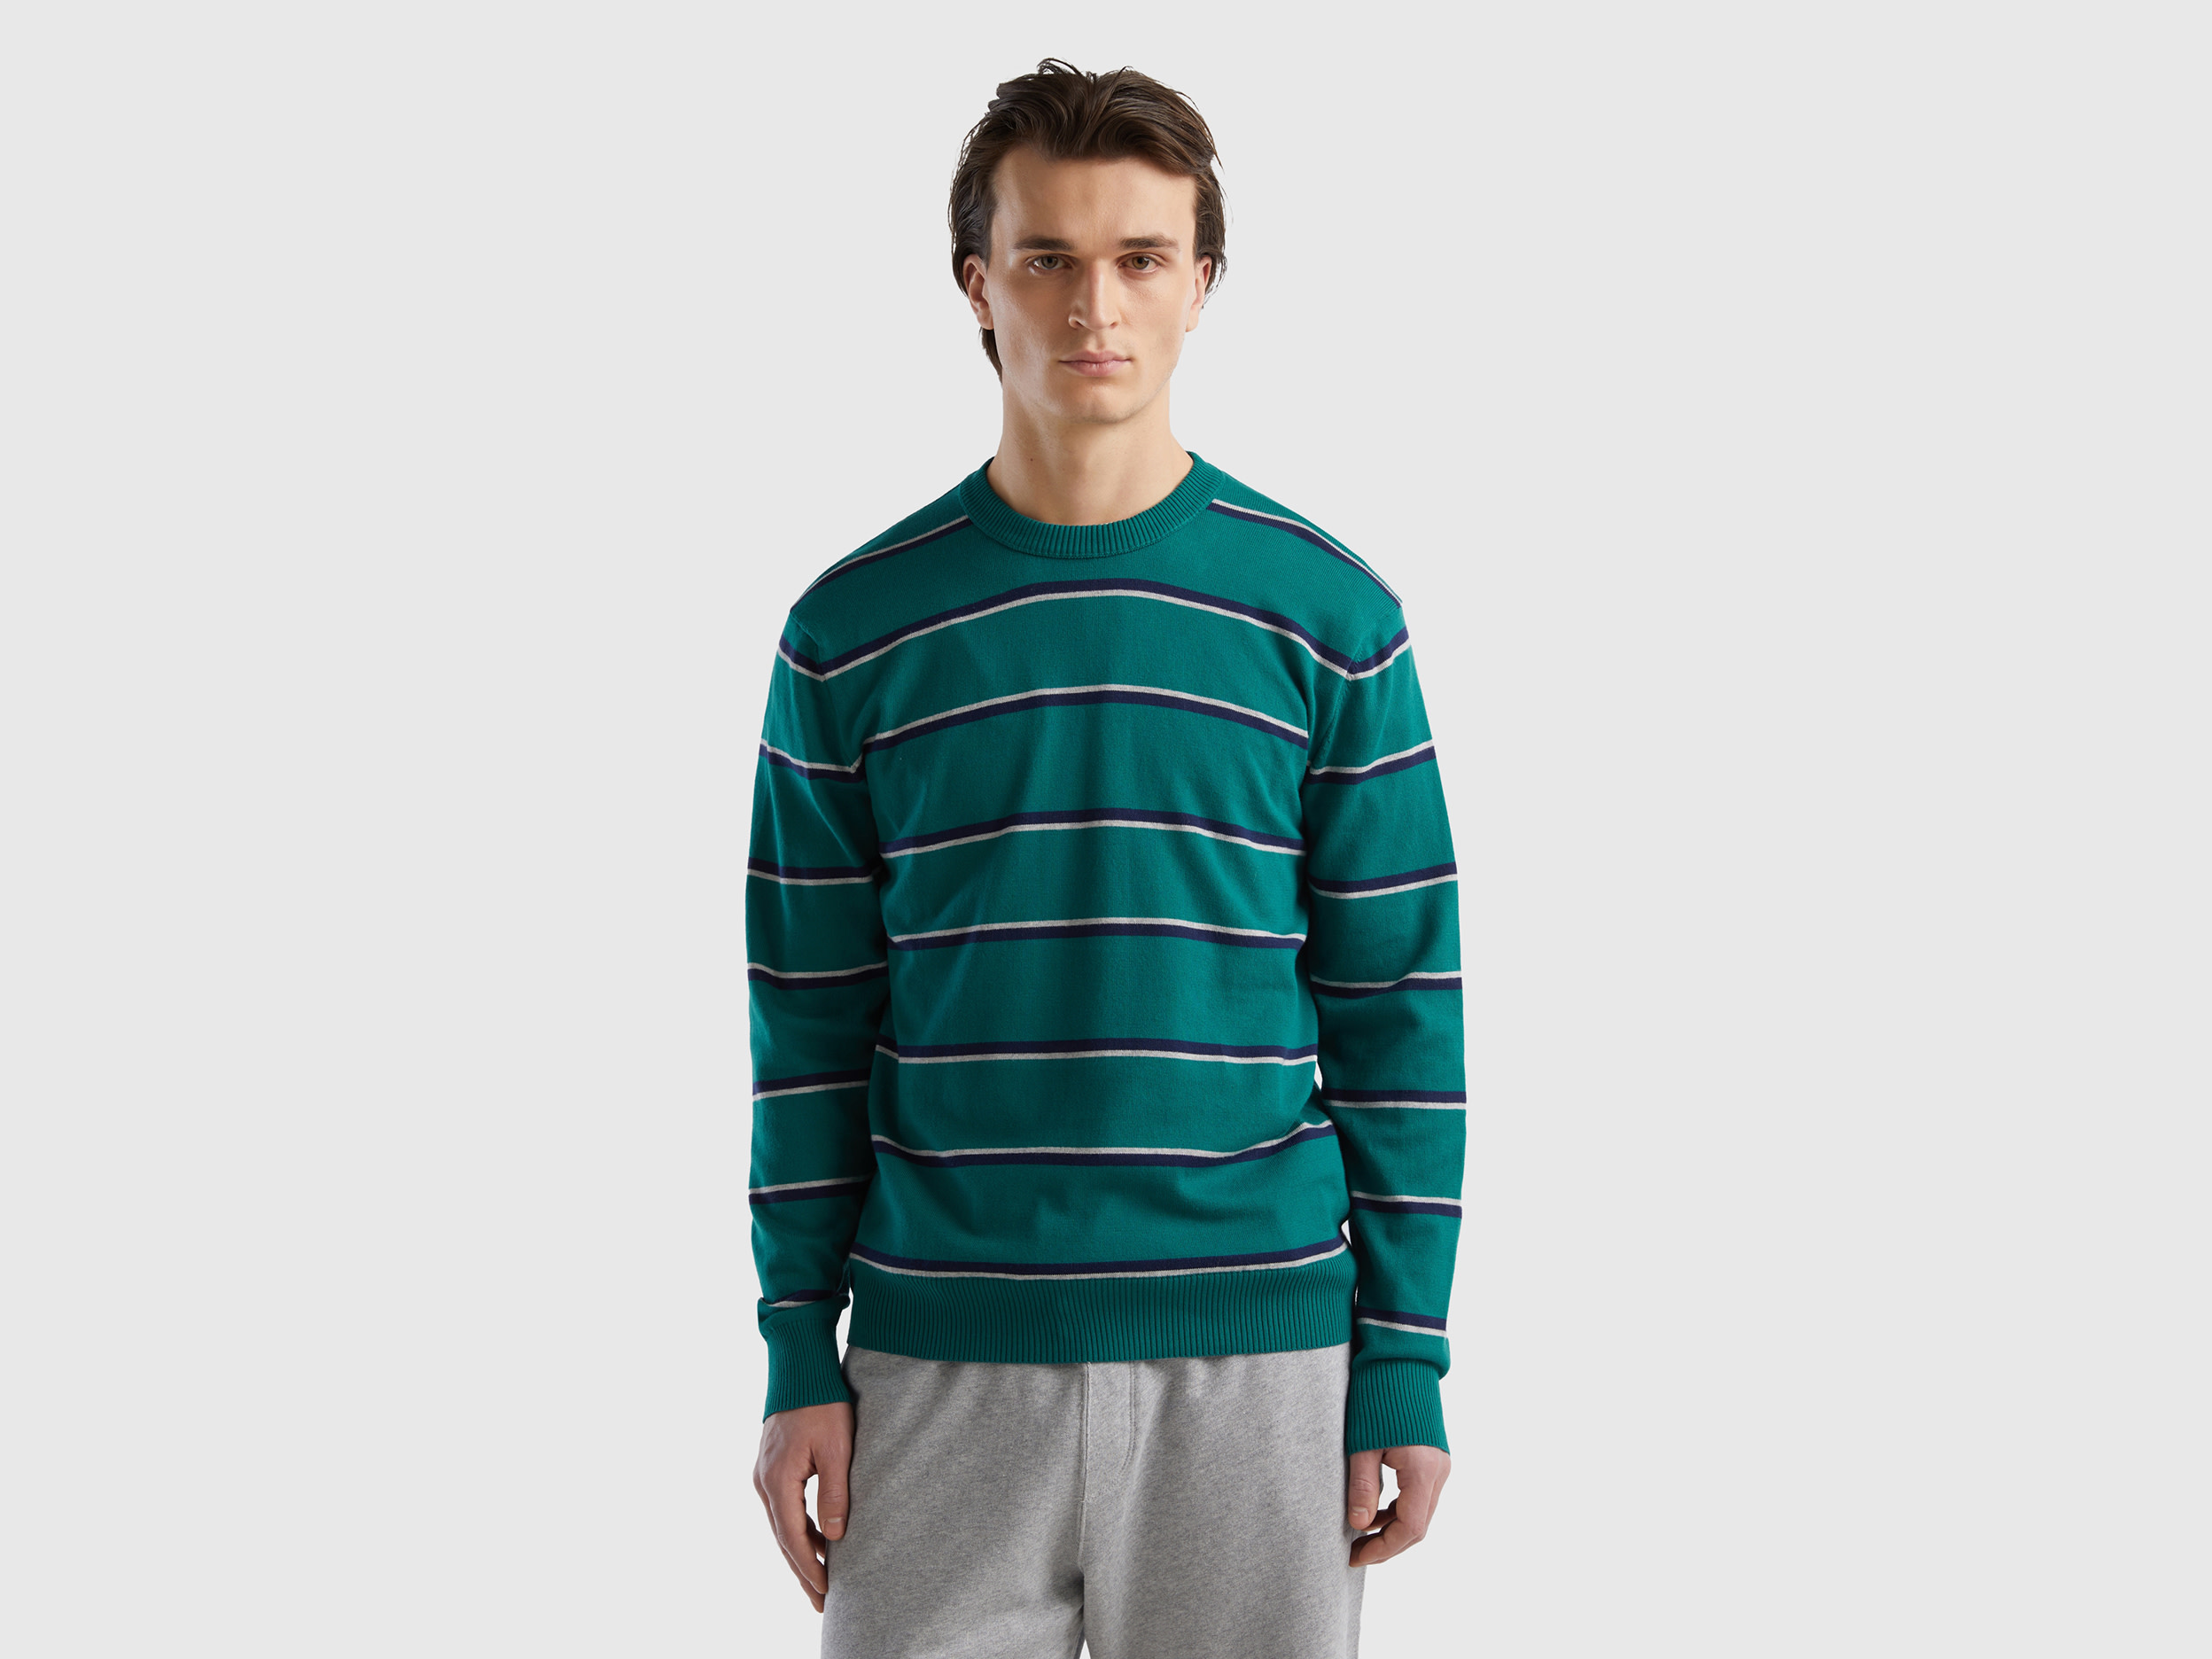 Benetton, Striped 100% Cotton Sweater, size L, Dark Green, Men